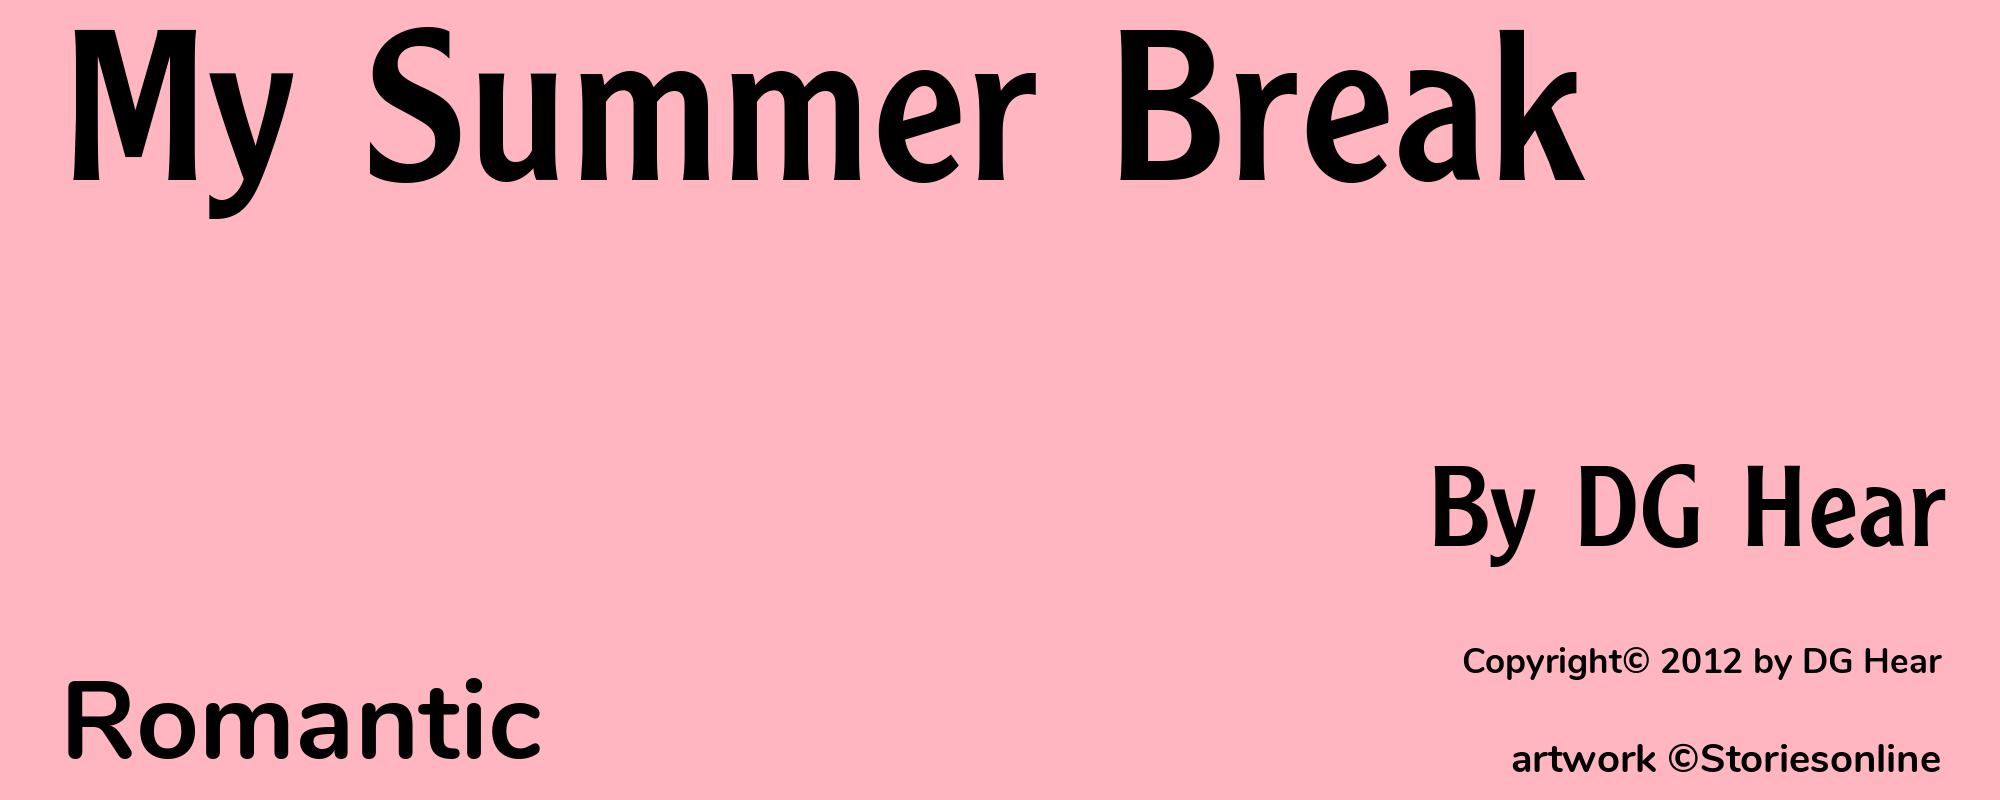 My Summer Break - Cover